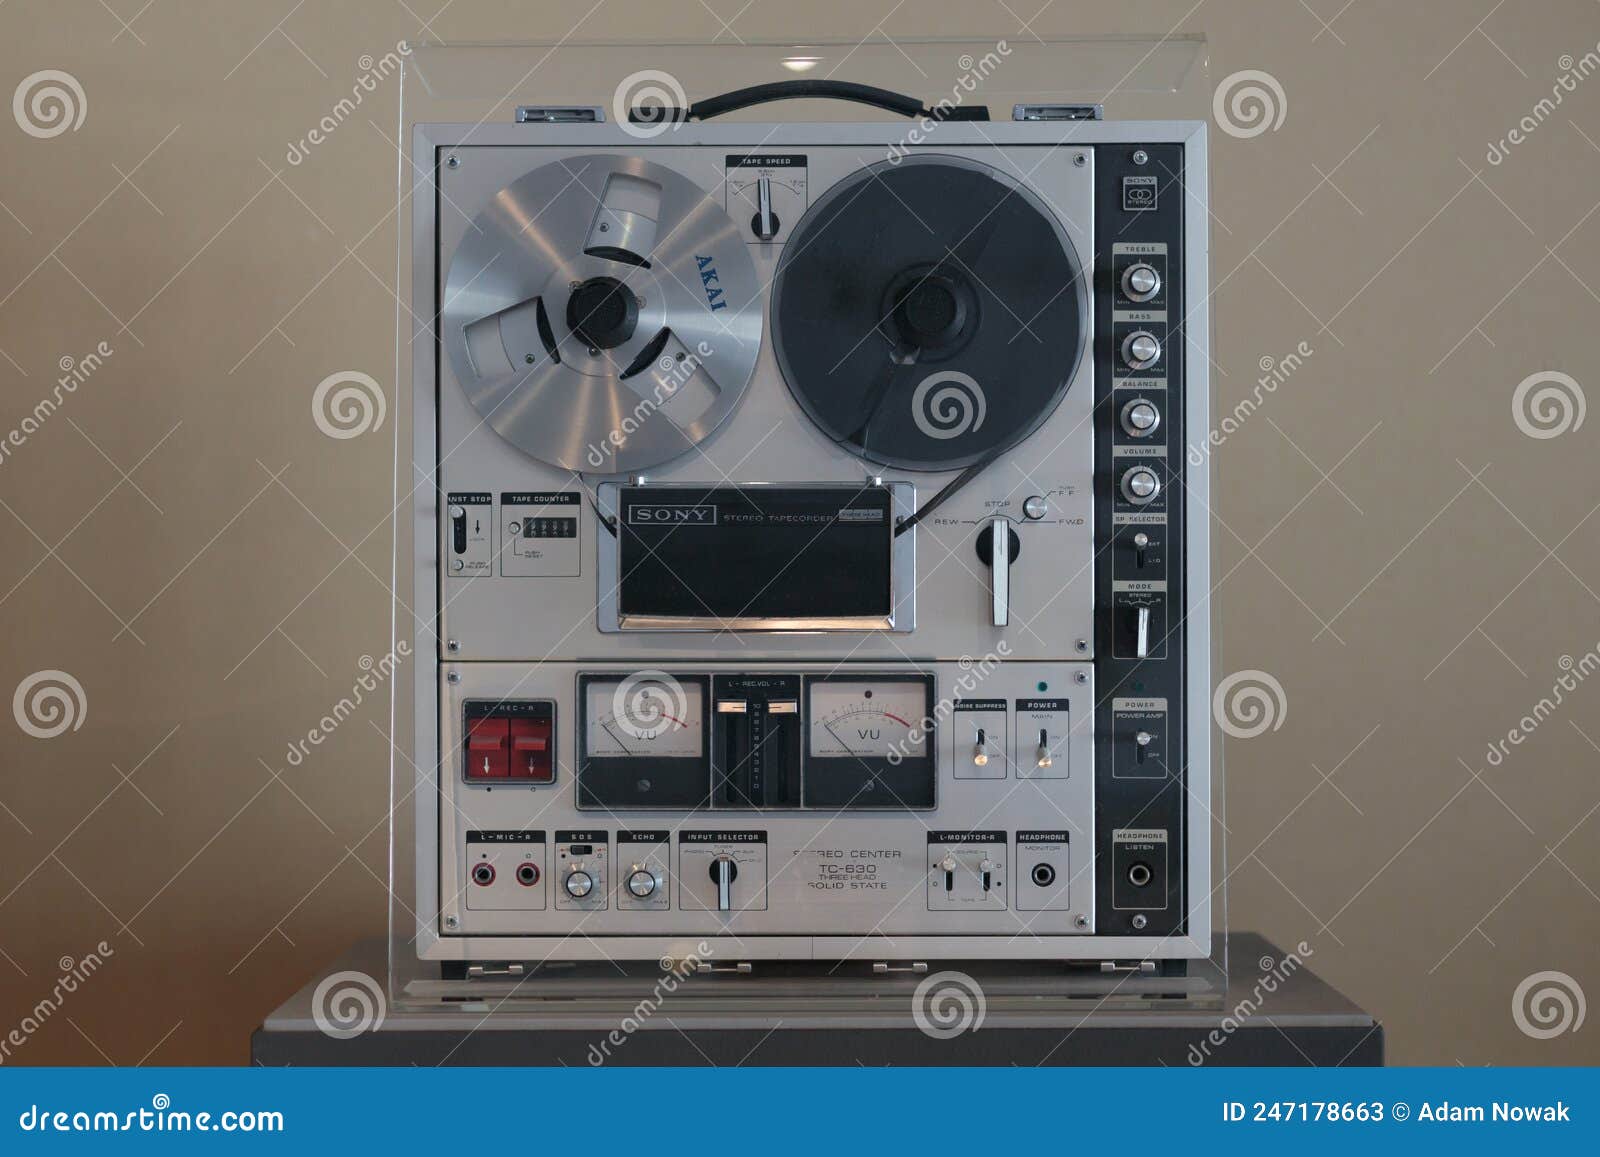 https://thumbs.dreamstime.com/z/vintage-reel-to-reel-tape-recorder-deck-oslo-norway-may-sony-tc-analog-stereo-reel-tape-deck-recorder-reel-to-reel-oslo-museum-247178663.jpg